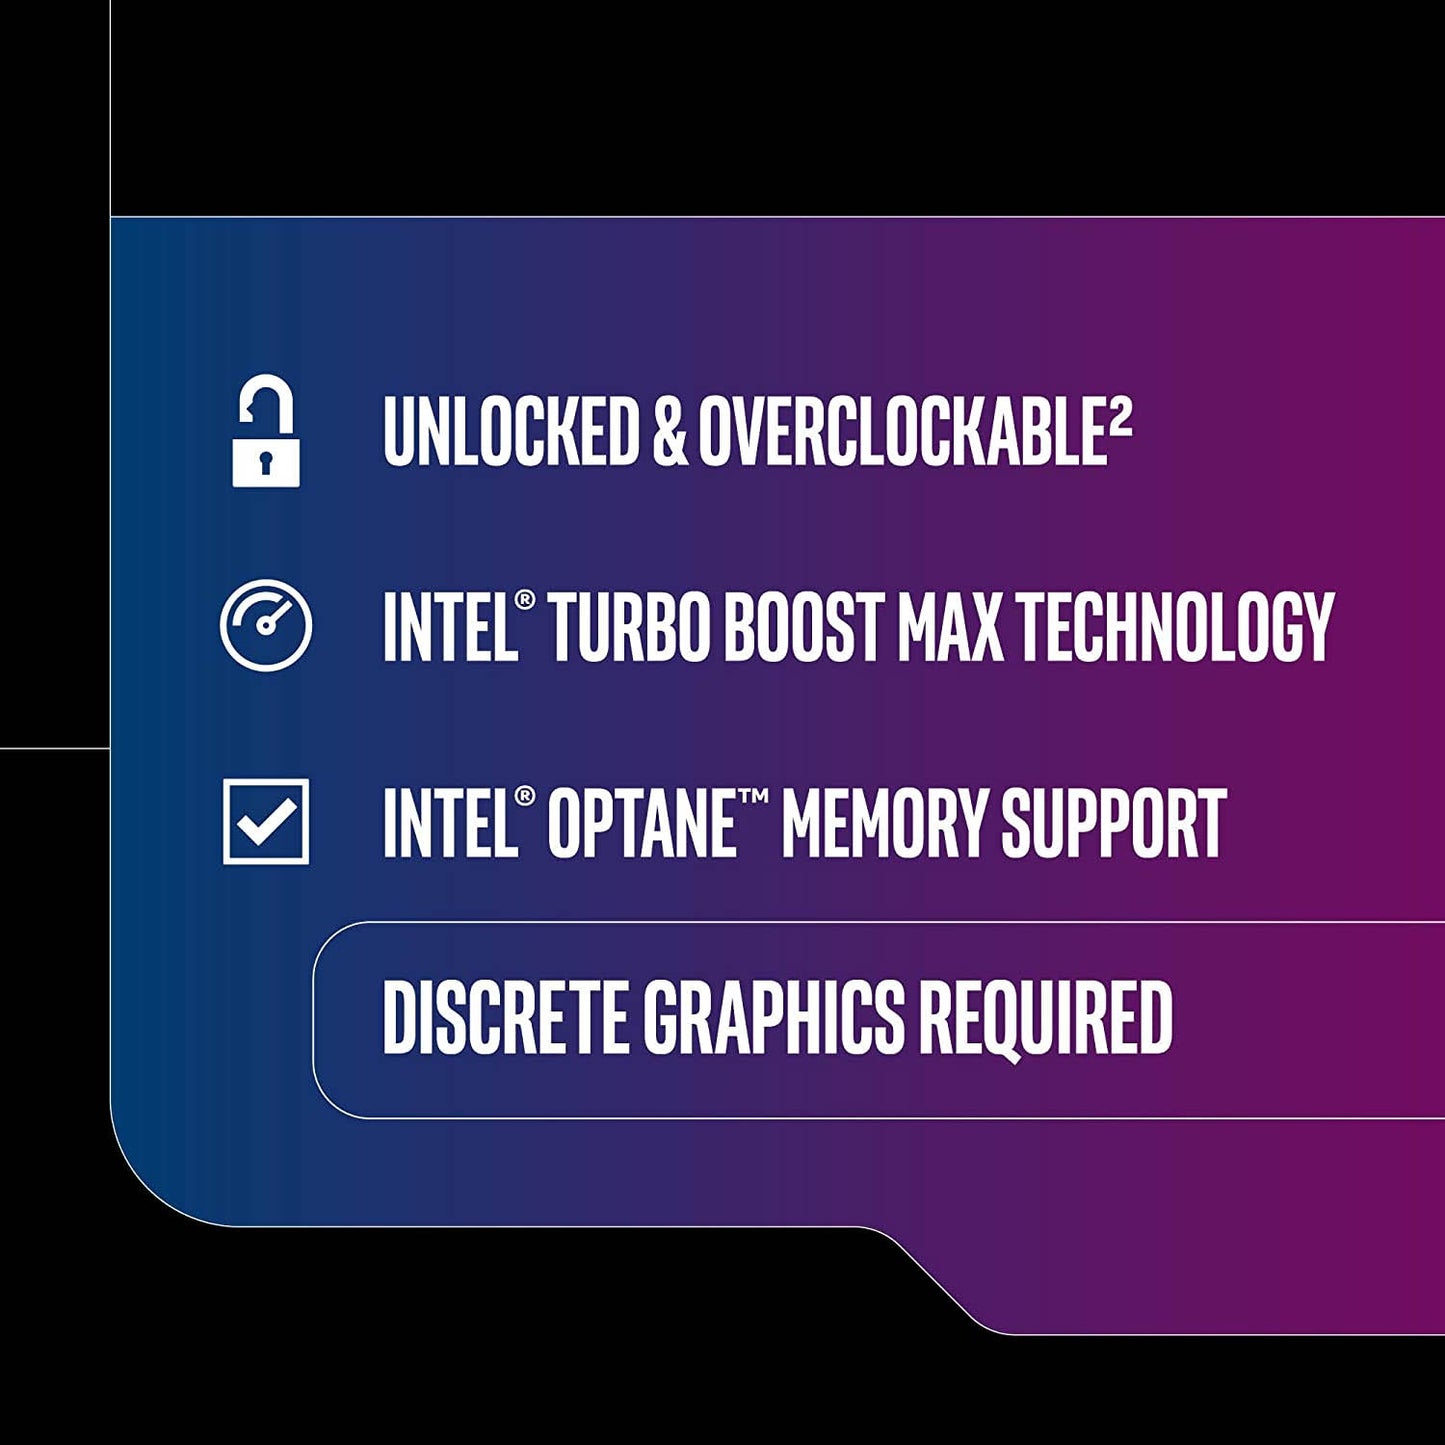 Intel Core 9th Gen i9-9900KF LGA1151 अनलॉक डेस्कटॉप प्रोसेसर 8 कोर 5.0GHz तक 16MB कैशे